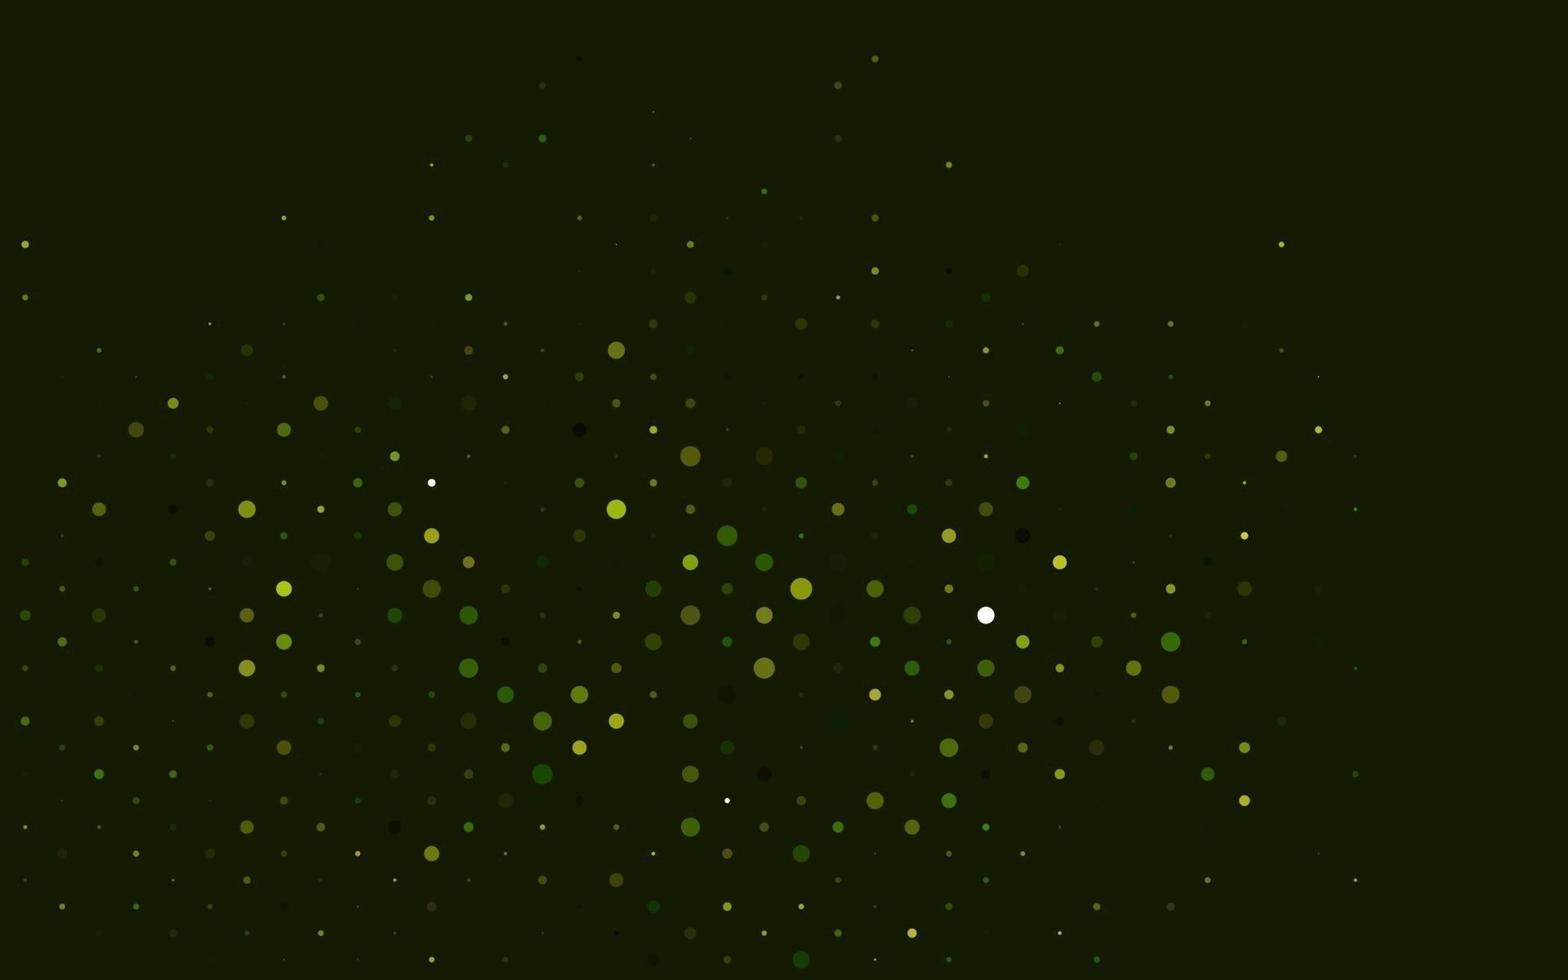 hellgrüne Vektorschablone mit Kreisen. vektor